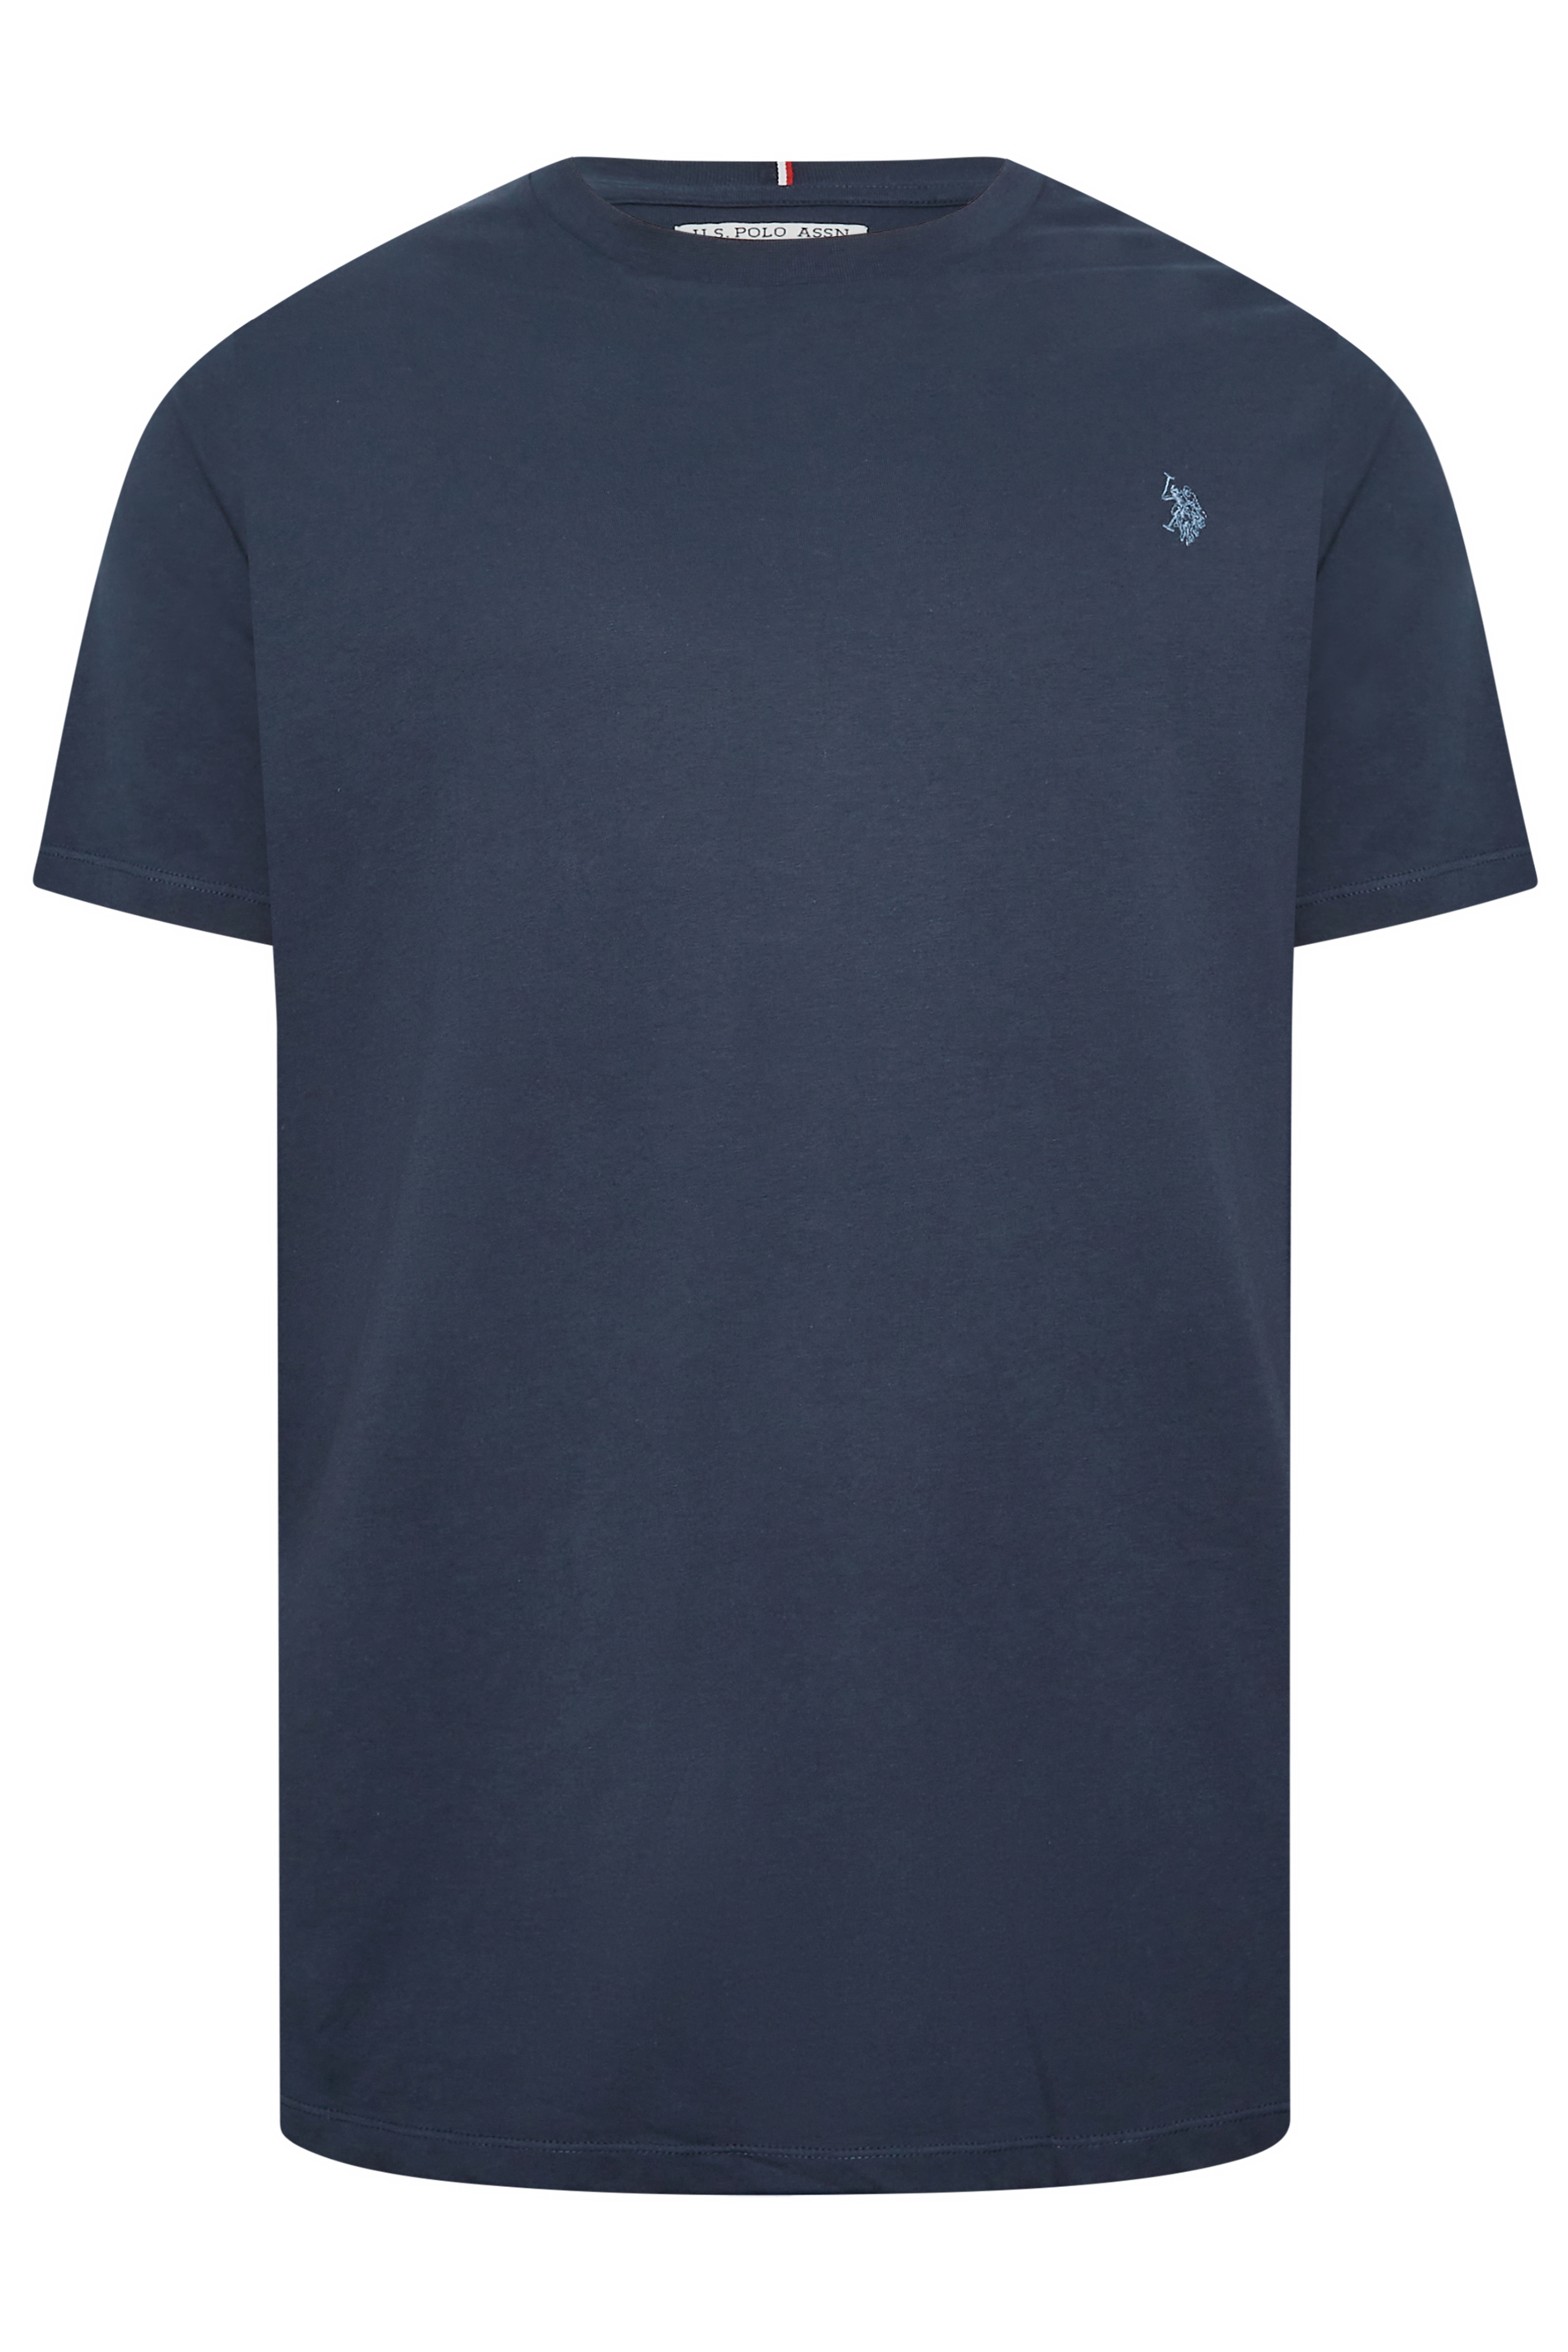 U.S. POLO ASSN. Big & Tall Navy Blue Core T-Shirt | BadRhino 3